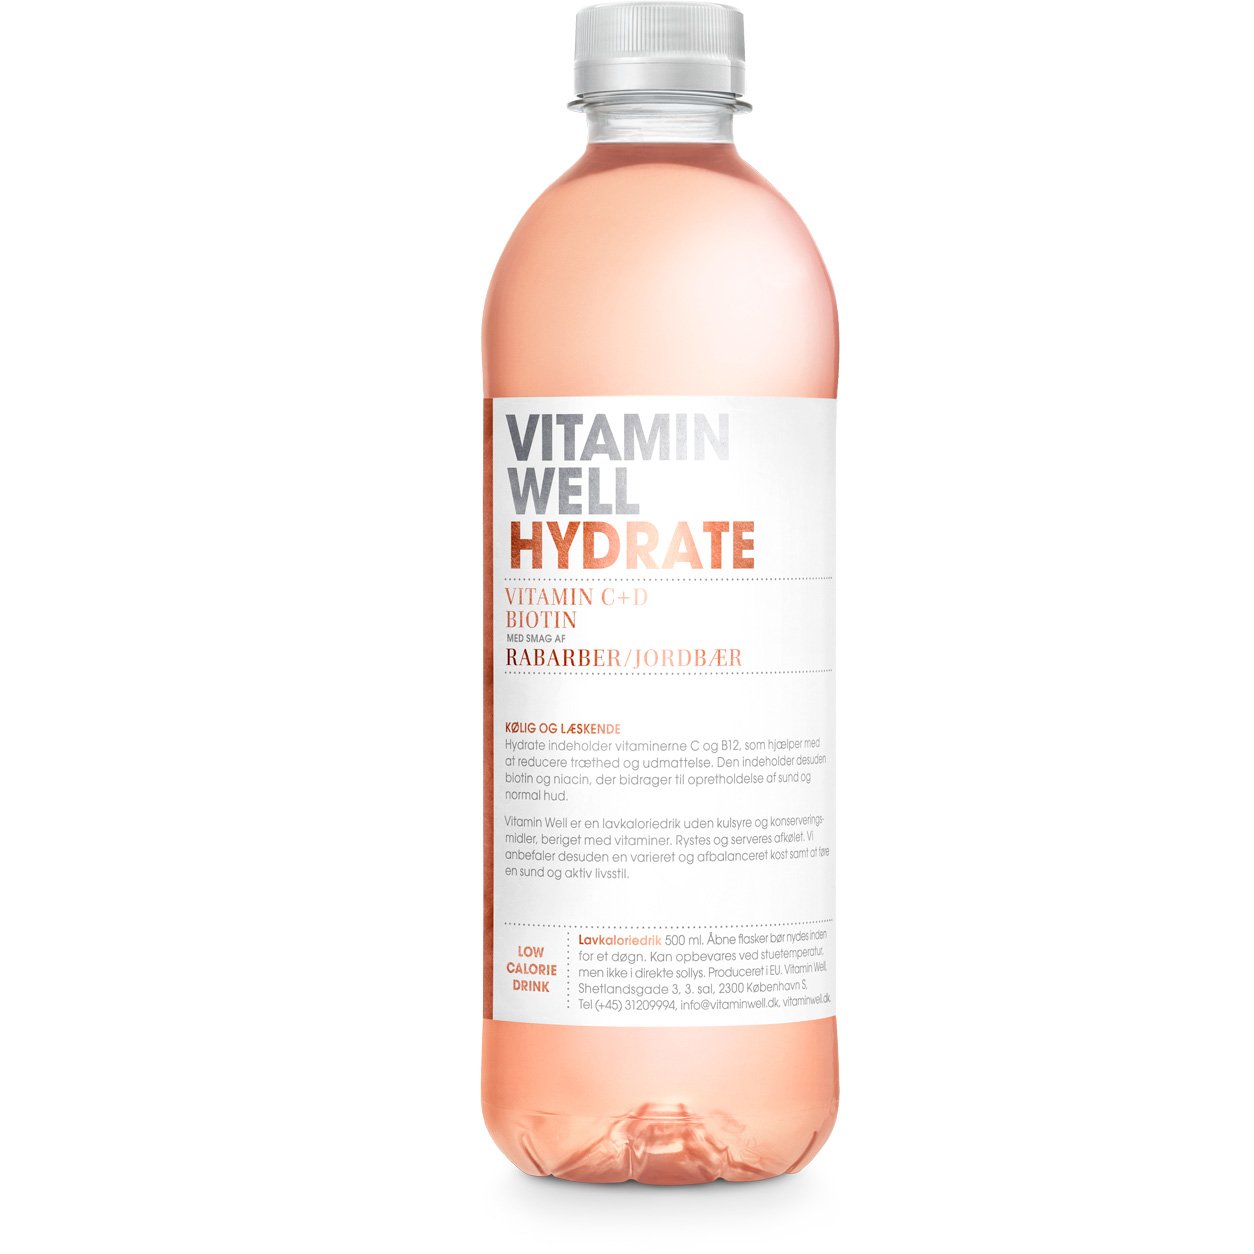 Vitamin Well Hydrate vitamindrik